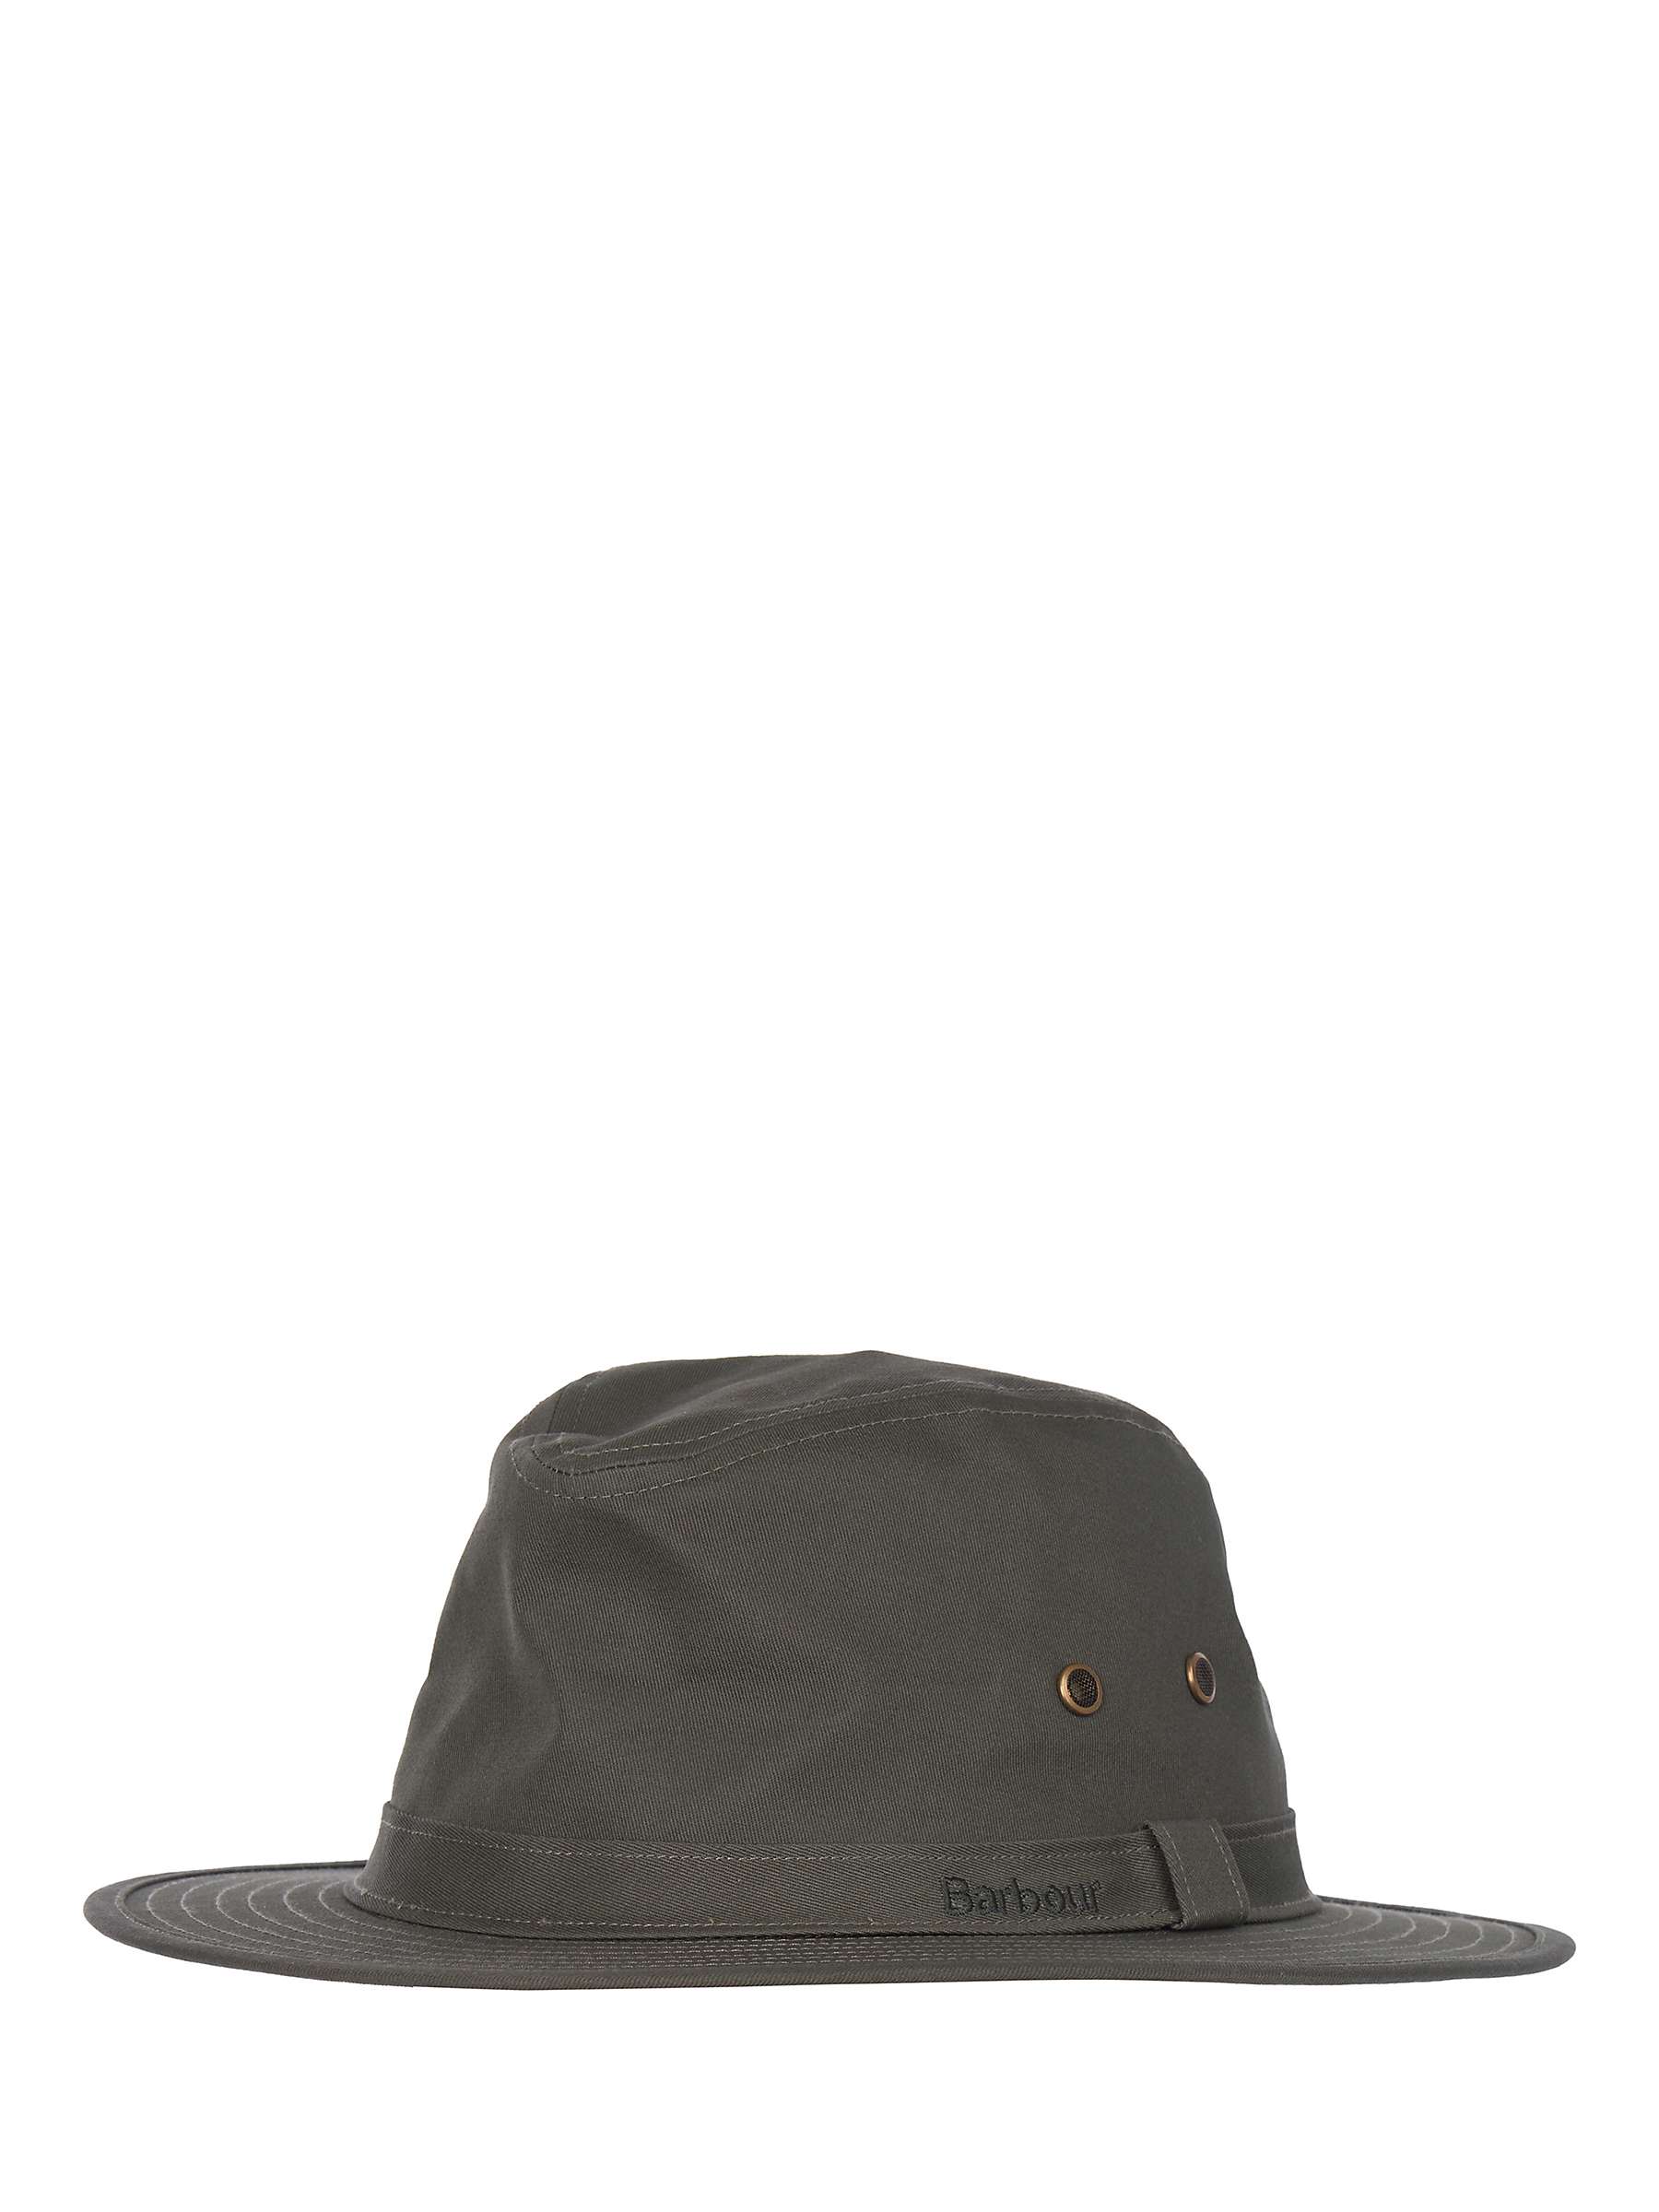 Buy Barbour Dawson Safari Hat, Olive Online at johnlewis.com